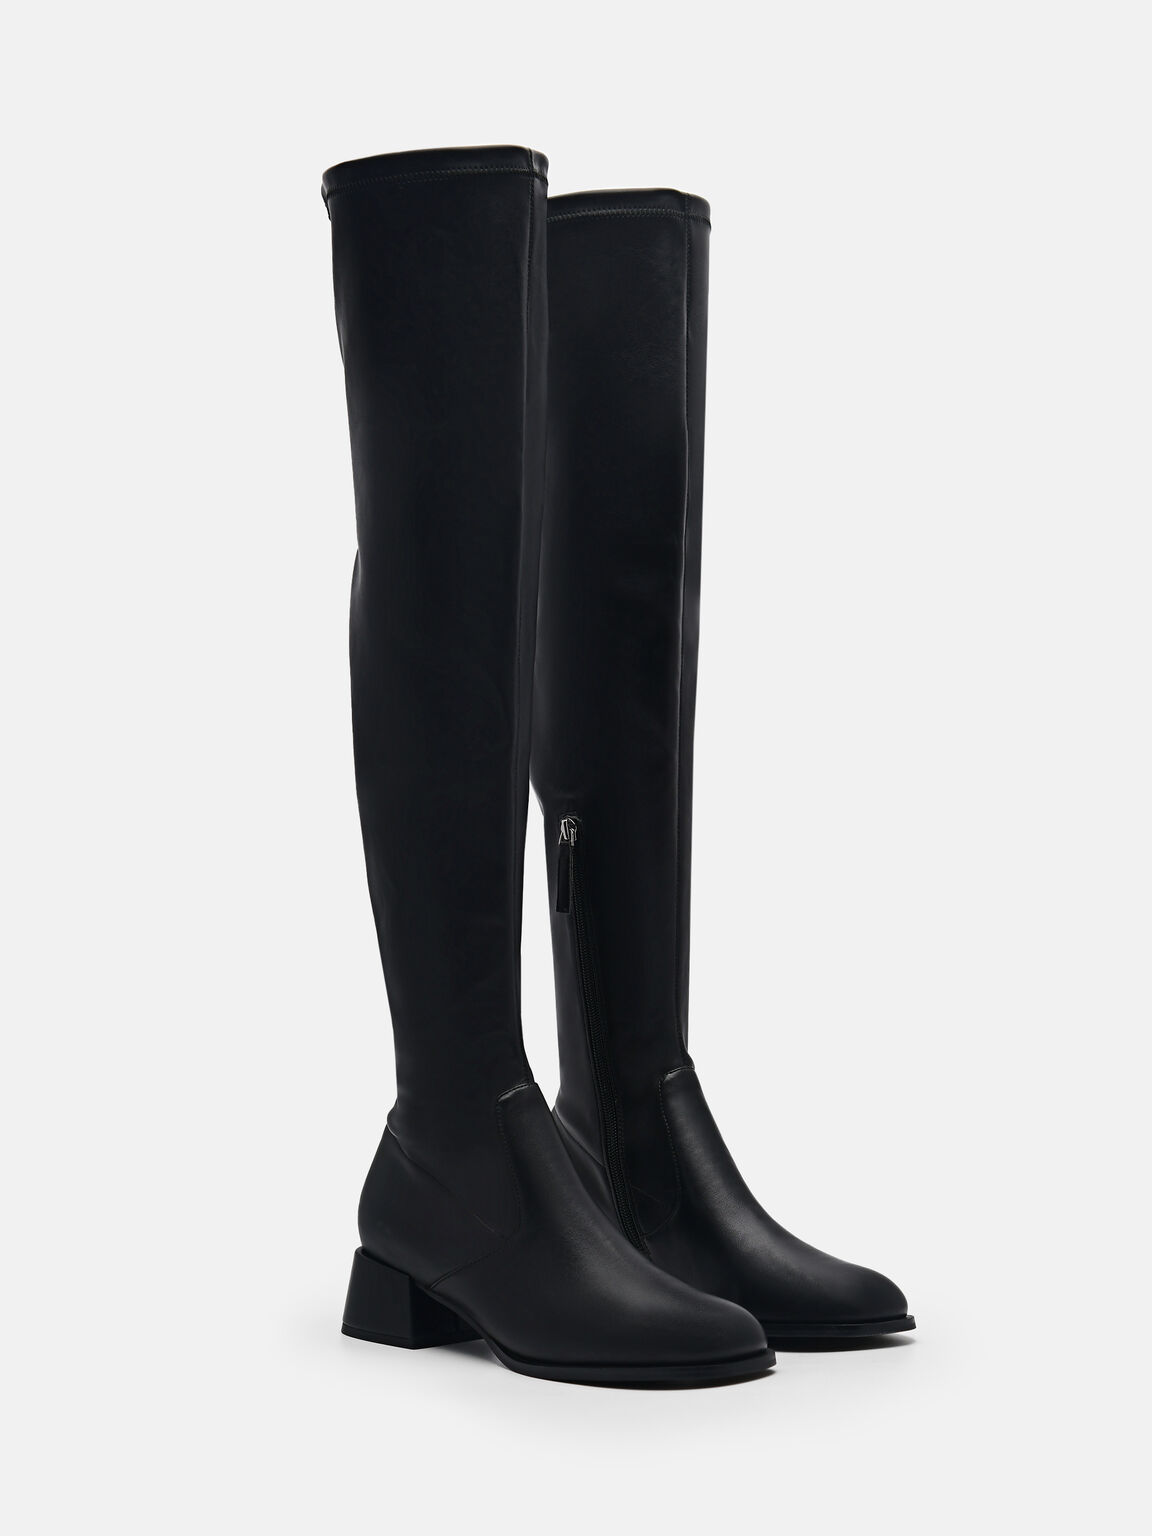 Poppy Thigh High Boots, Black